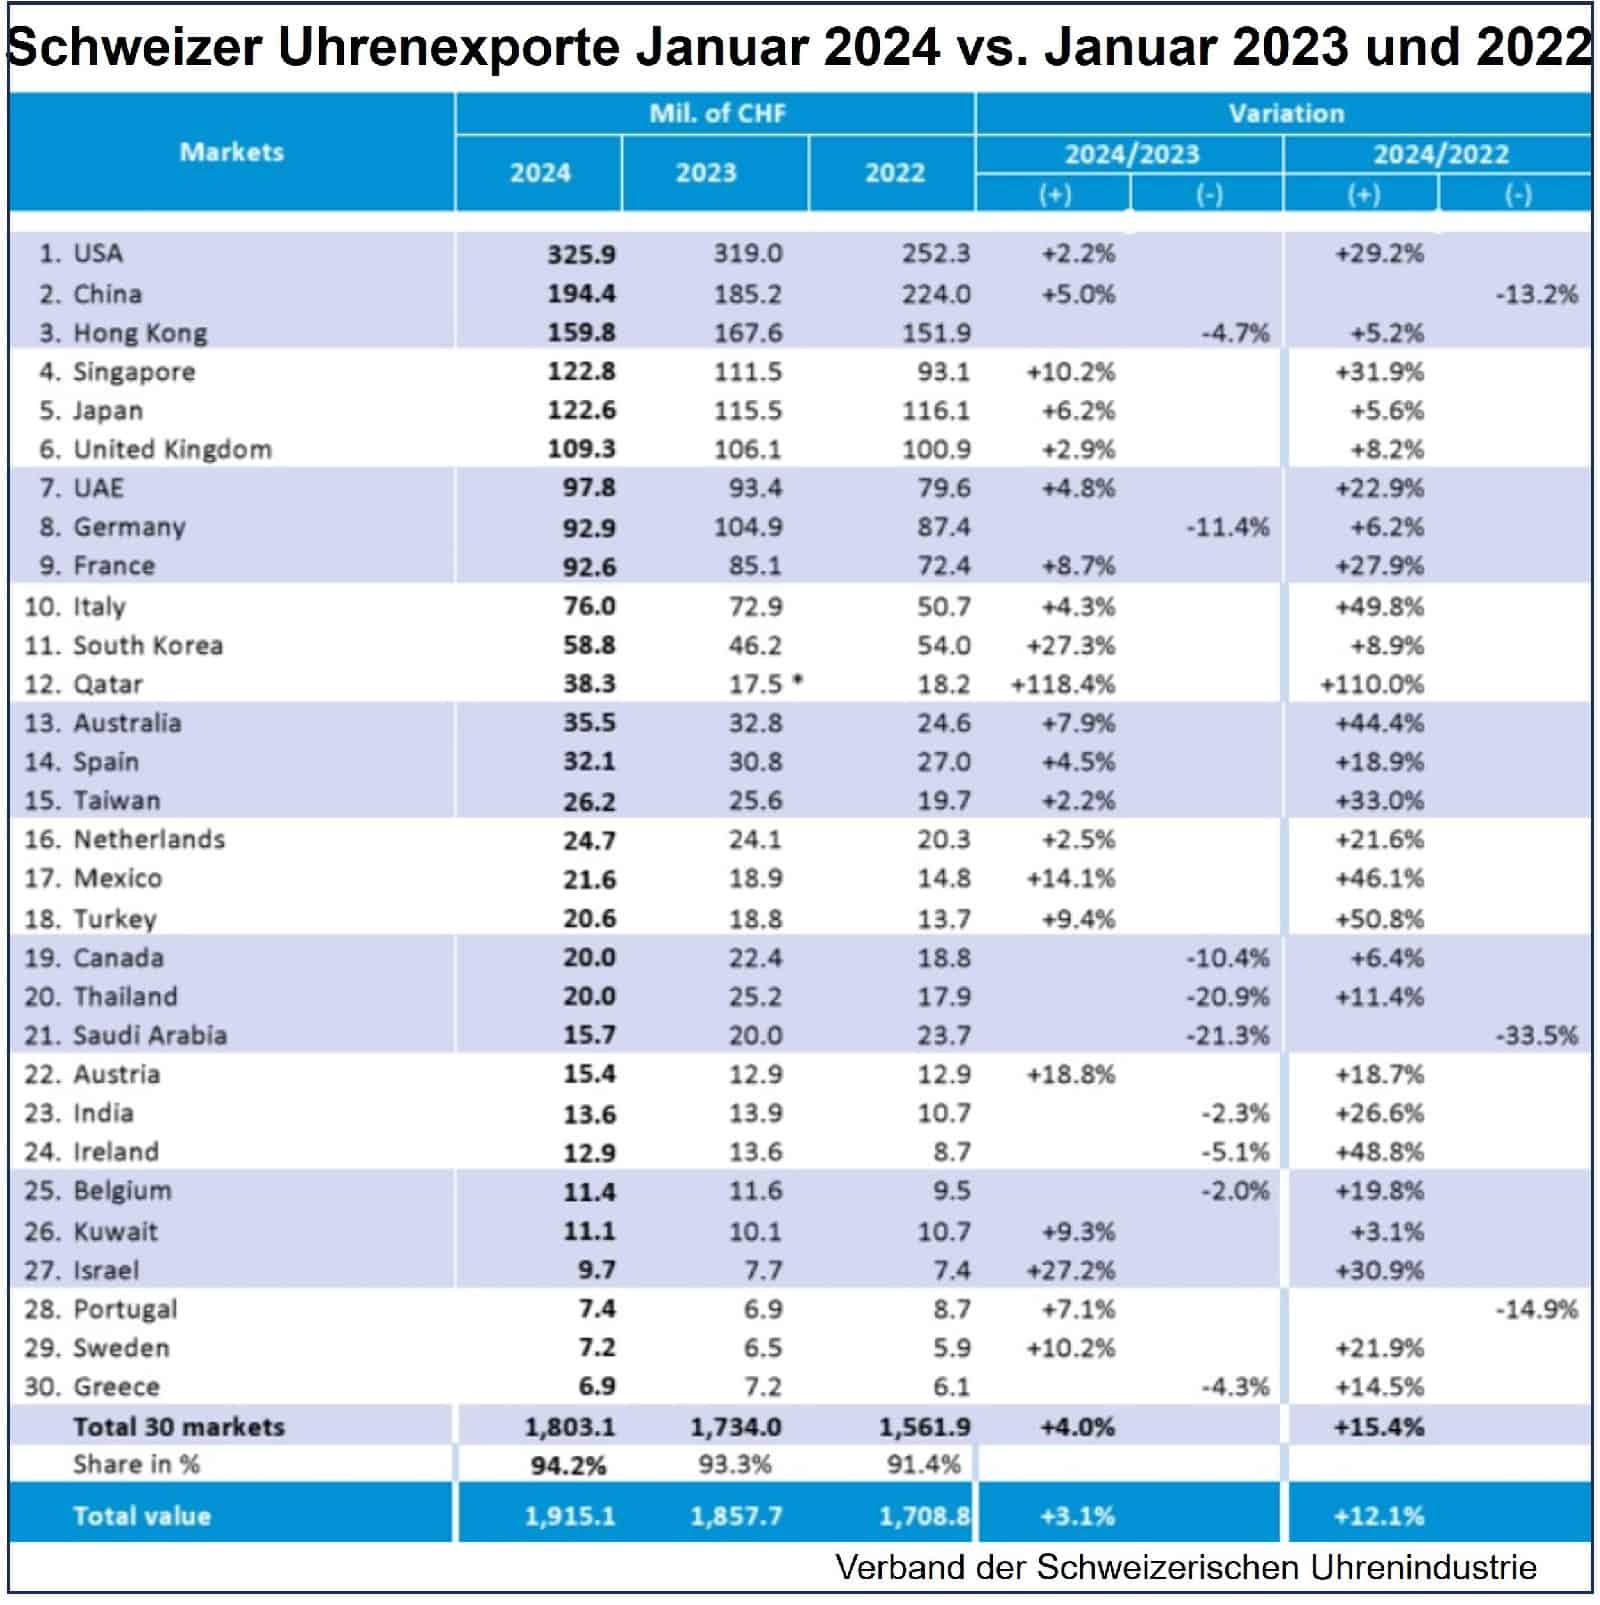 Schweizer Uhrenexporte im Januar 2024 vs Januar 2023 nach Ländern 